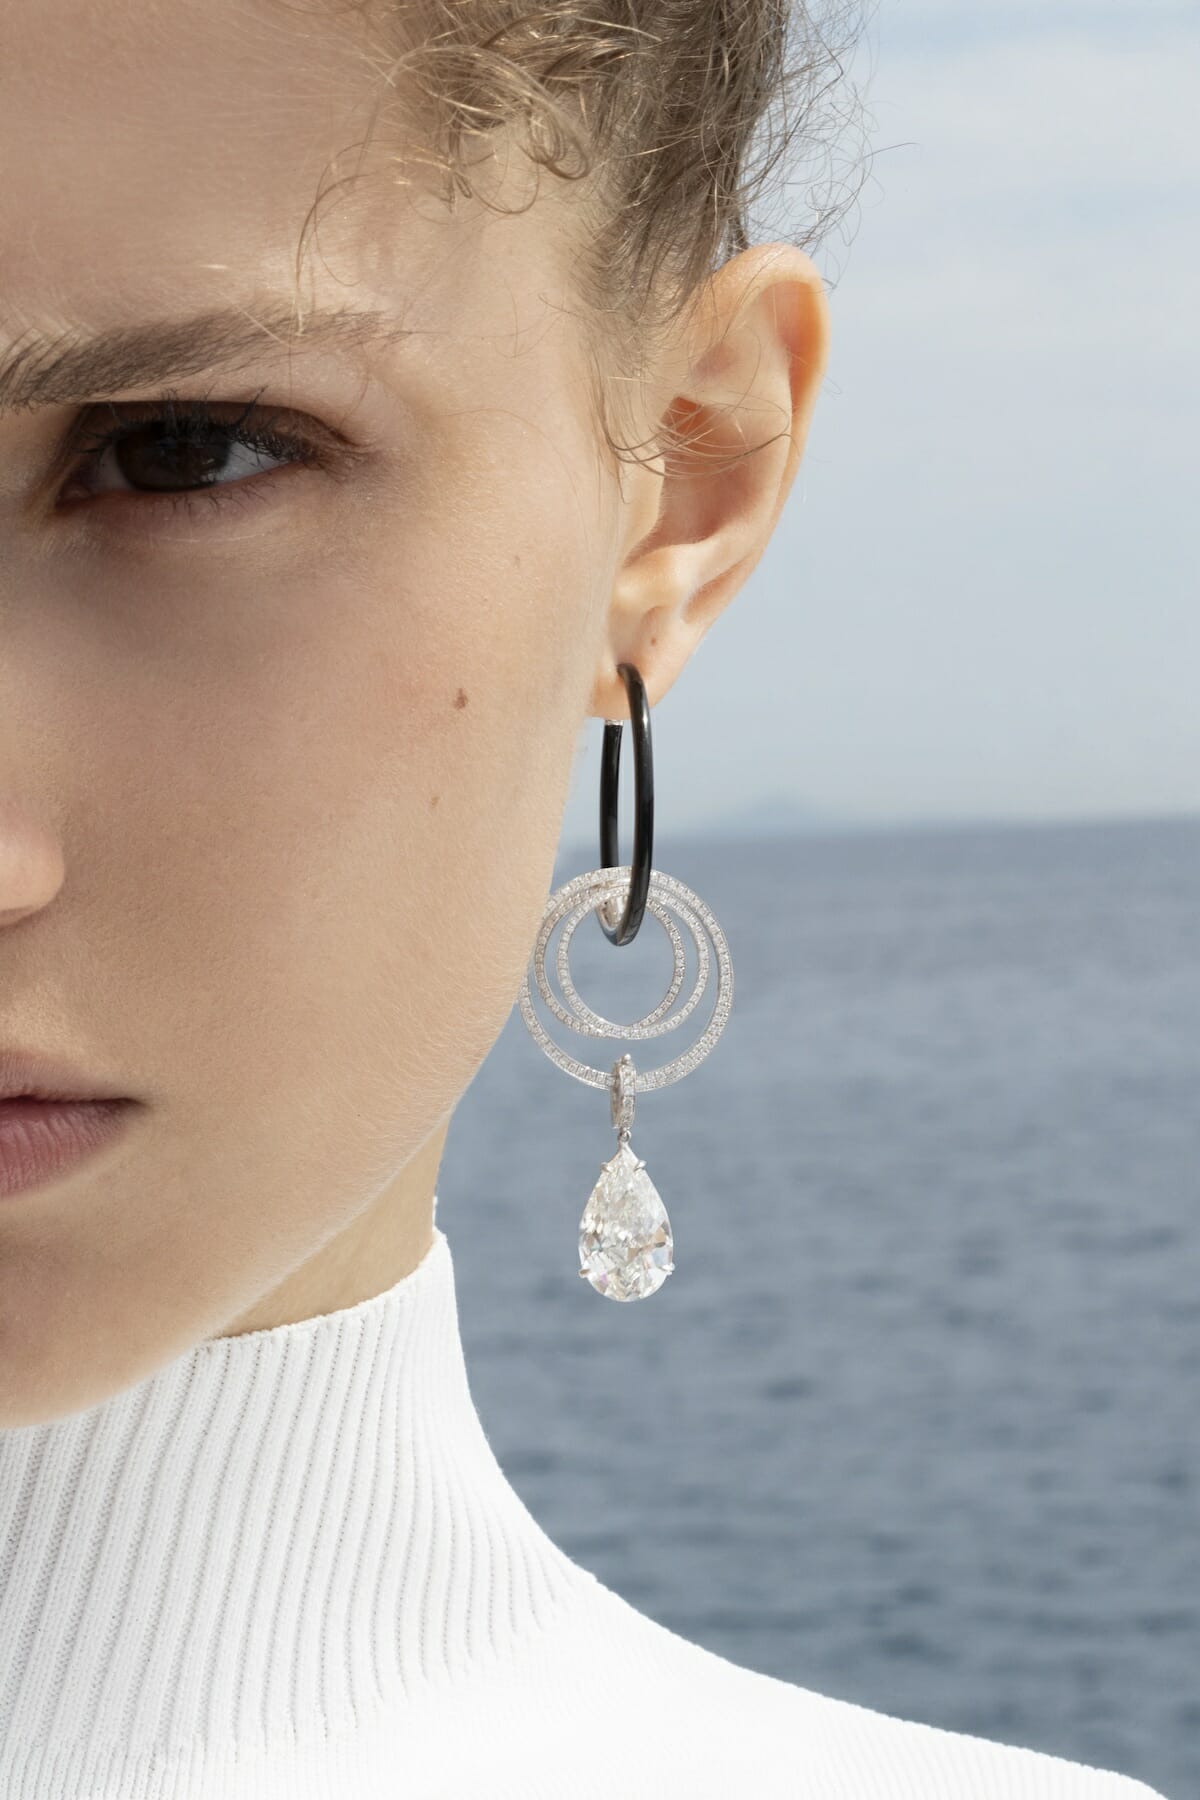 couture las vegas 2021 jewelry designer nikos koulis